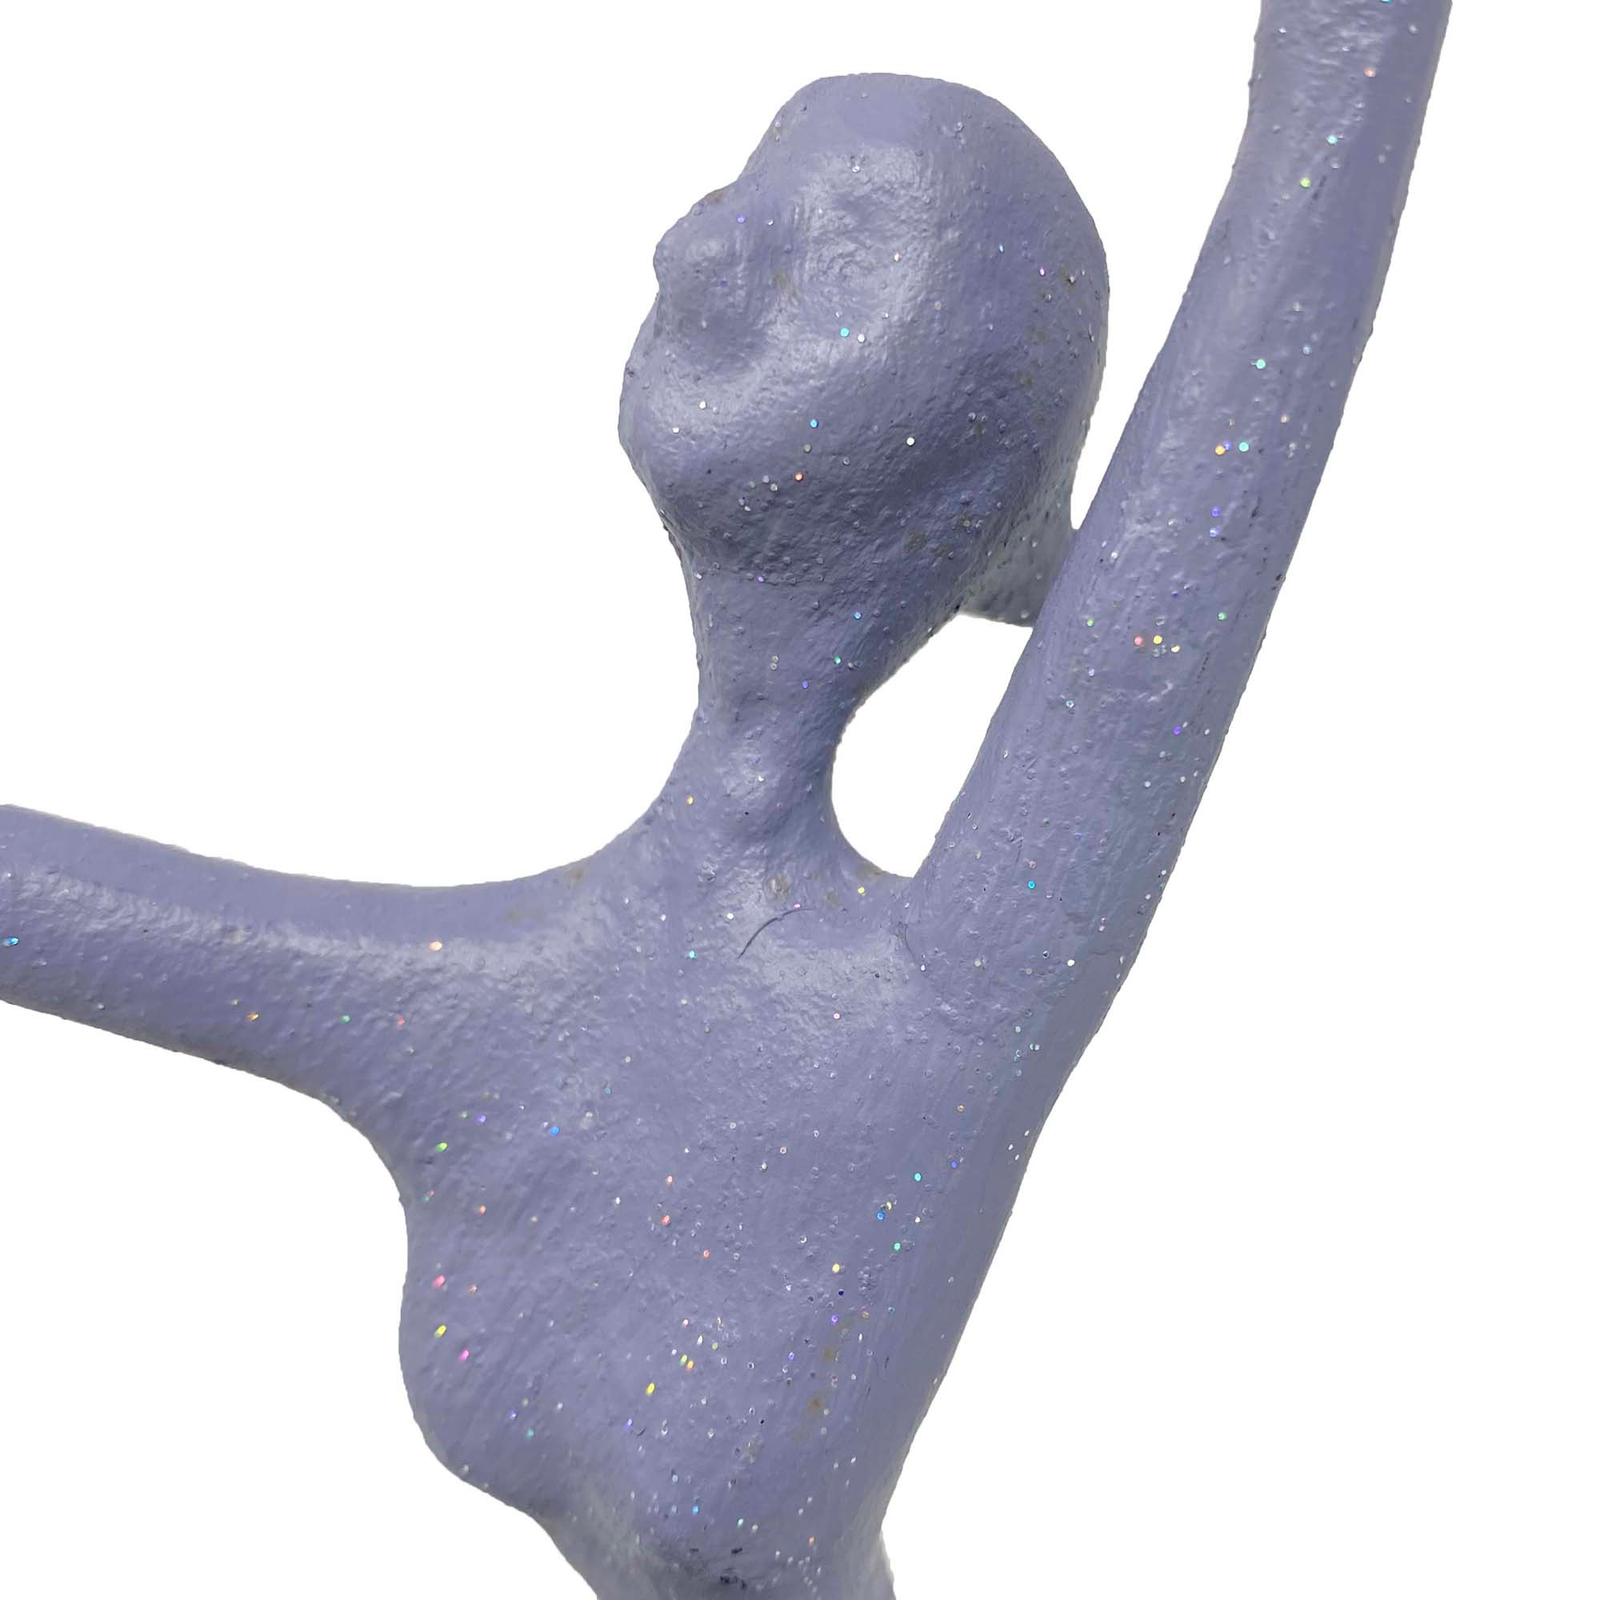 Elur Alicia Dancer Iron Figurine 40Cm Grey Shimmer Statue Statues Elur   